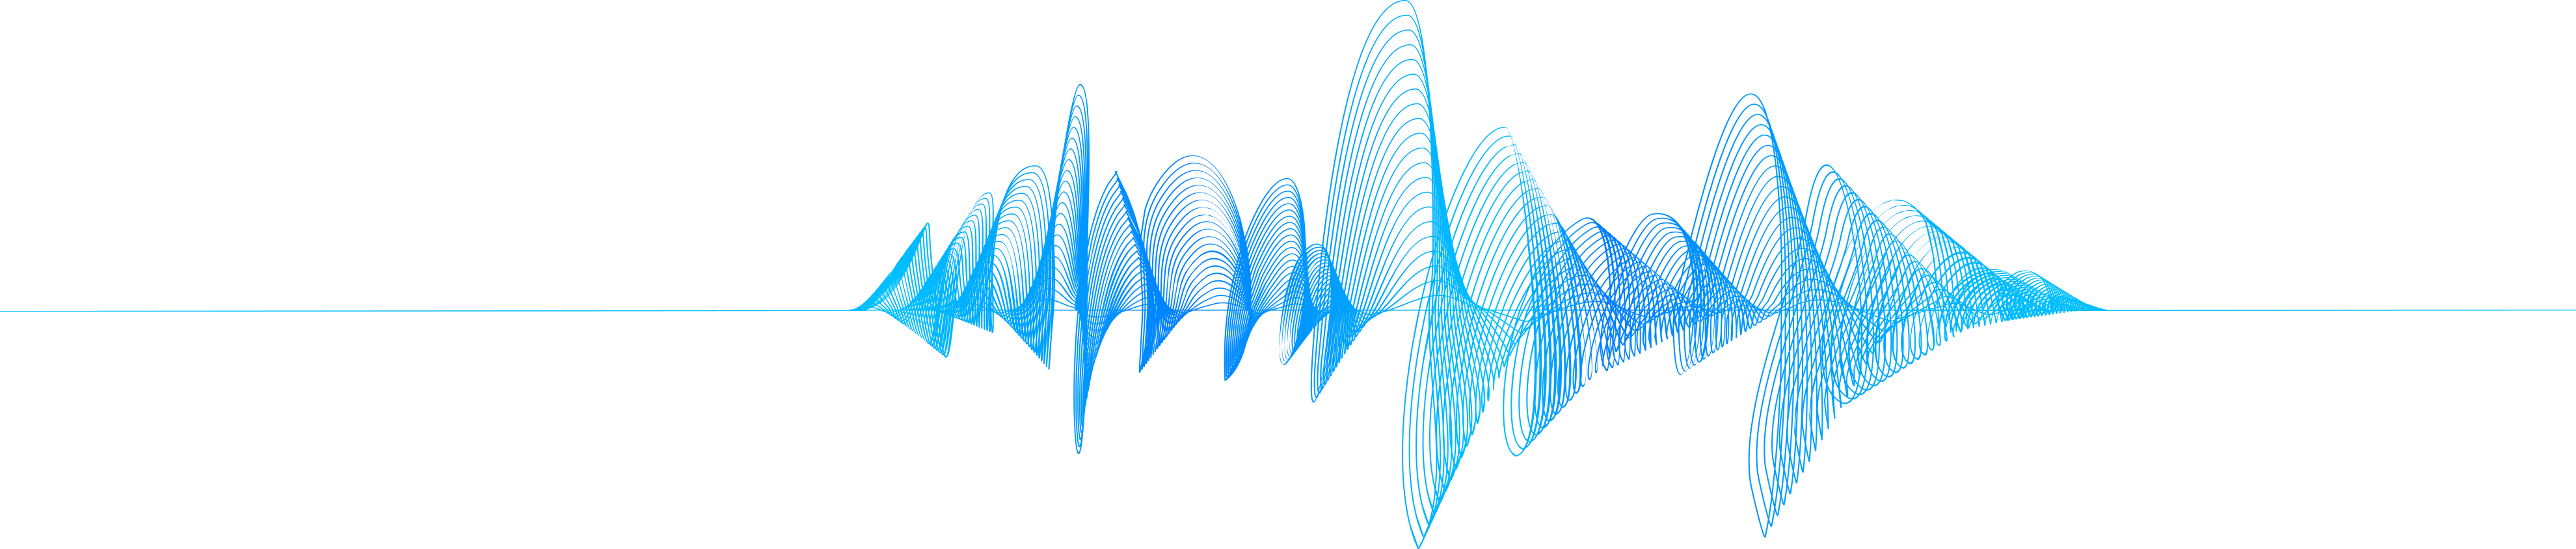 Blue Soundwave Visualization PNG